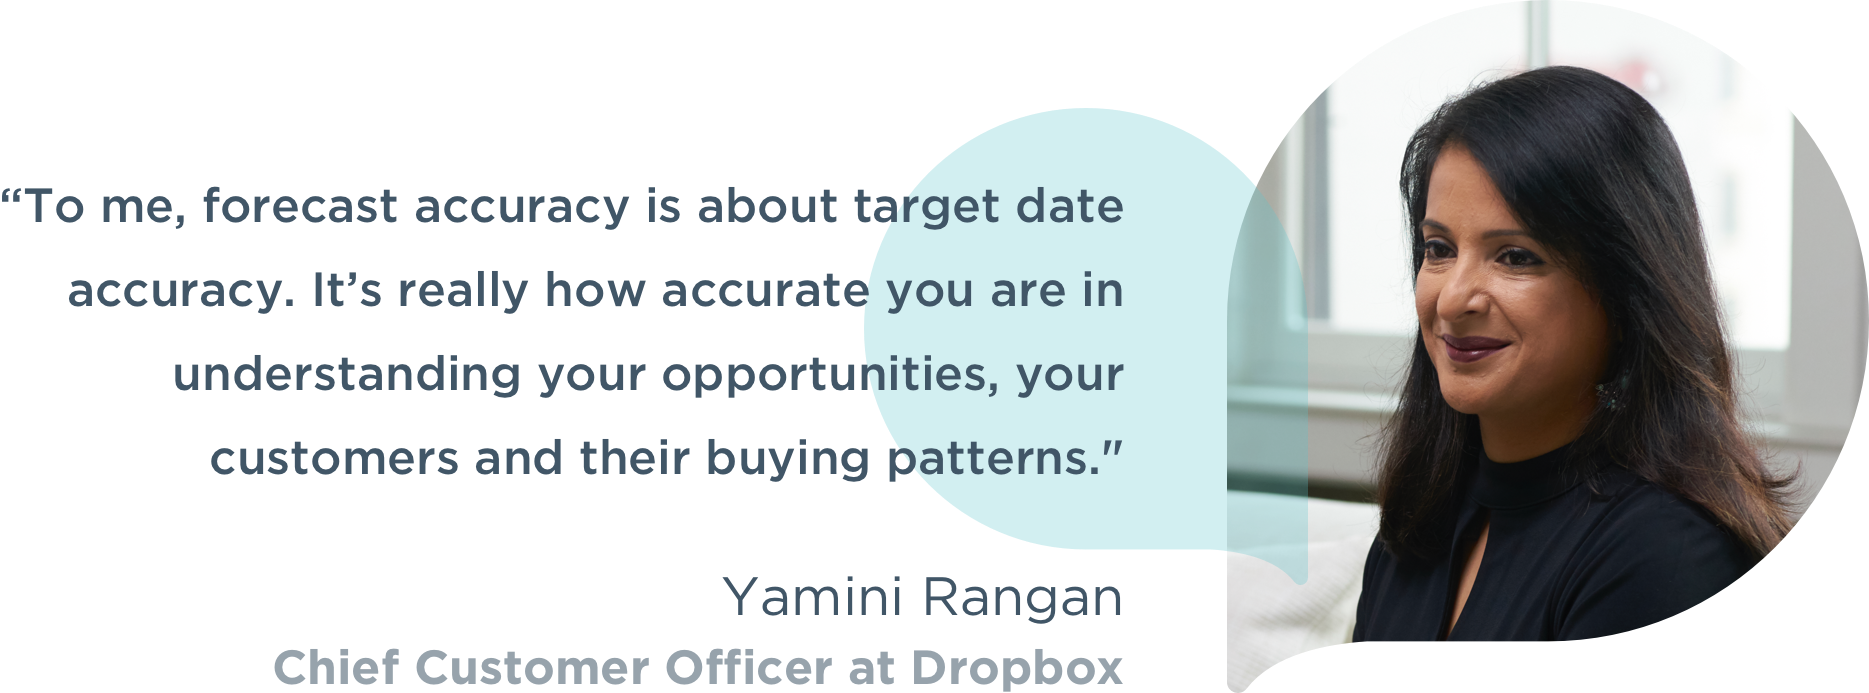 Banner image featuring a quote and headshot photograph of Yamini Rangan, Chief Customer Officer at Dropbox